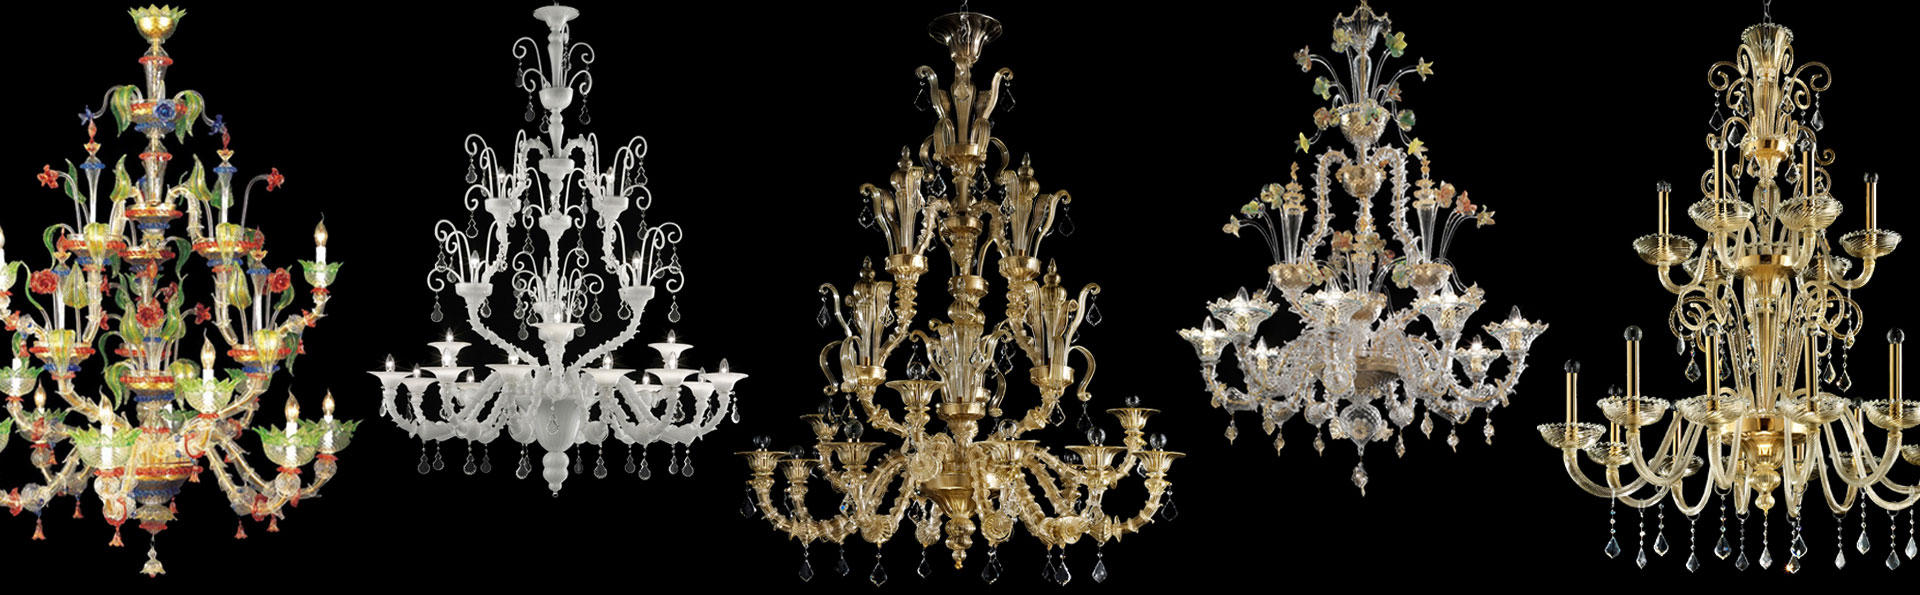 Murano luxury chandeliers